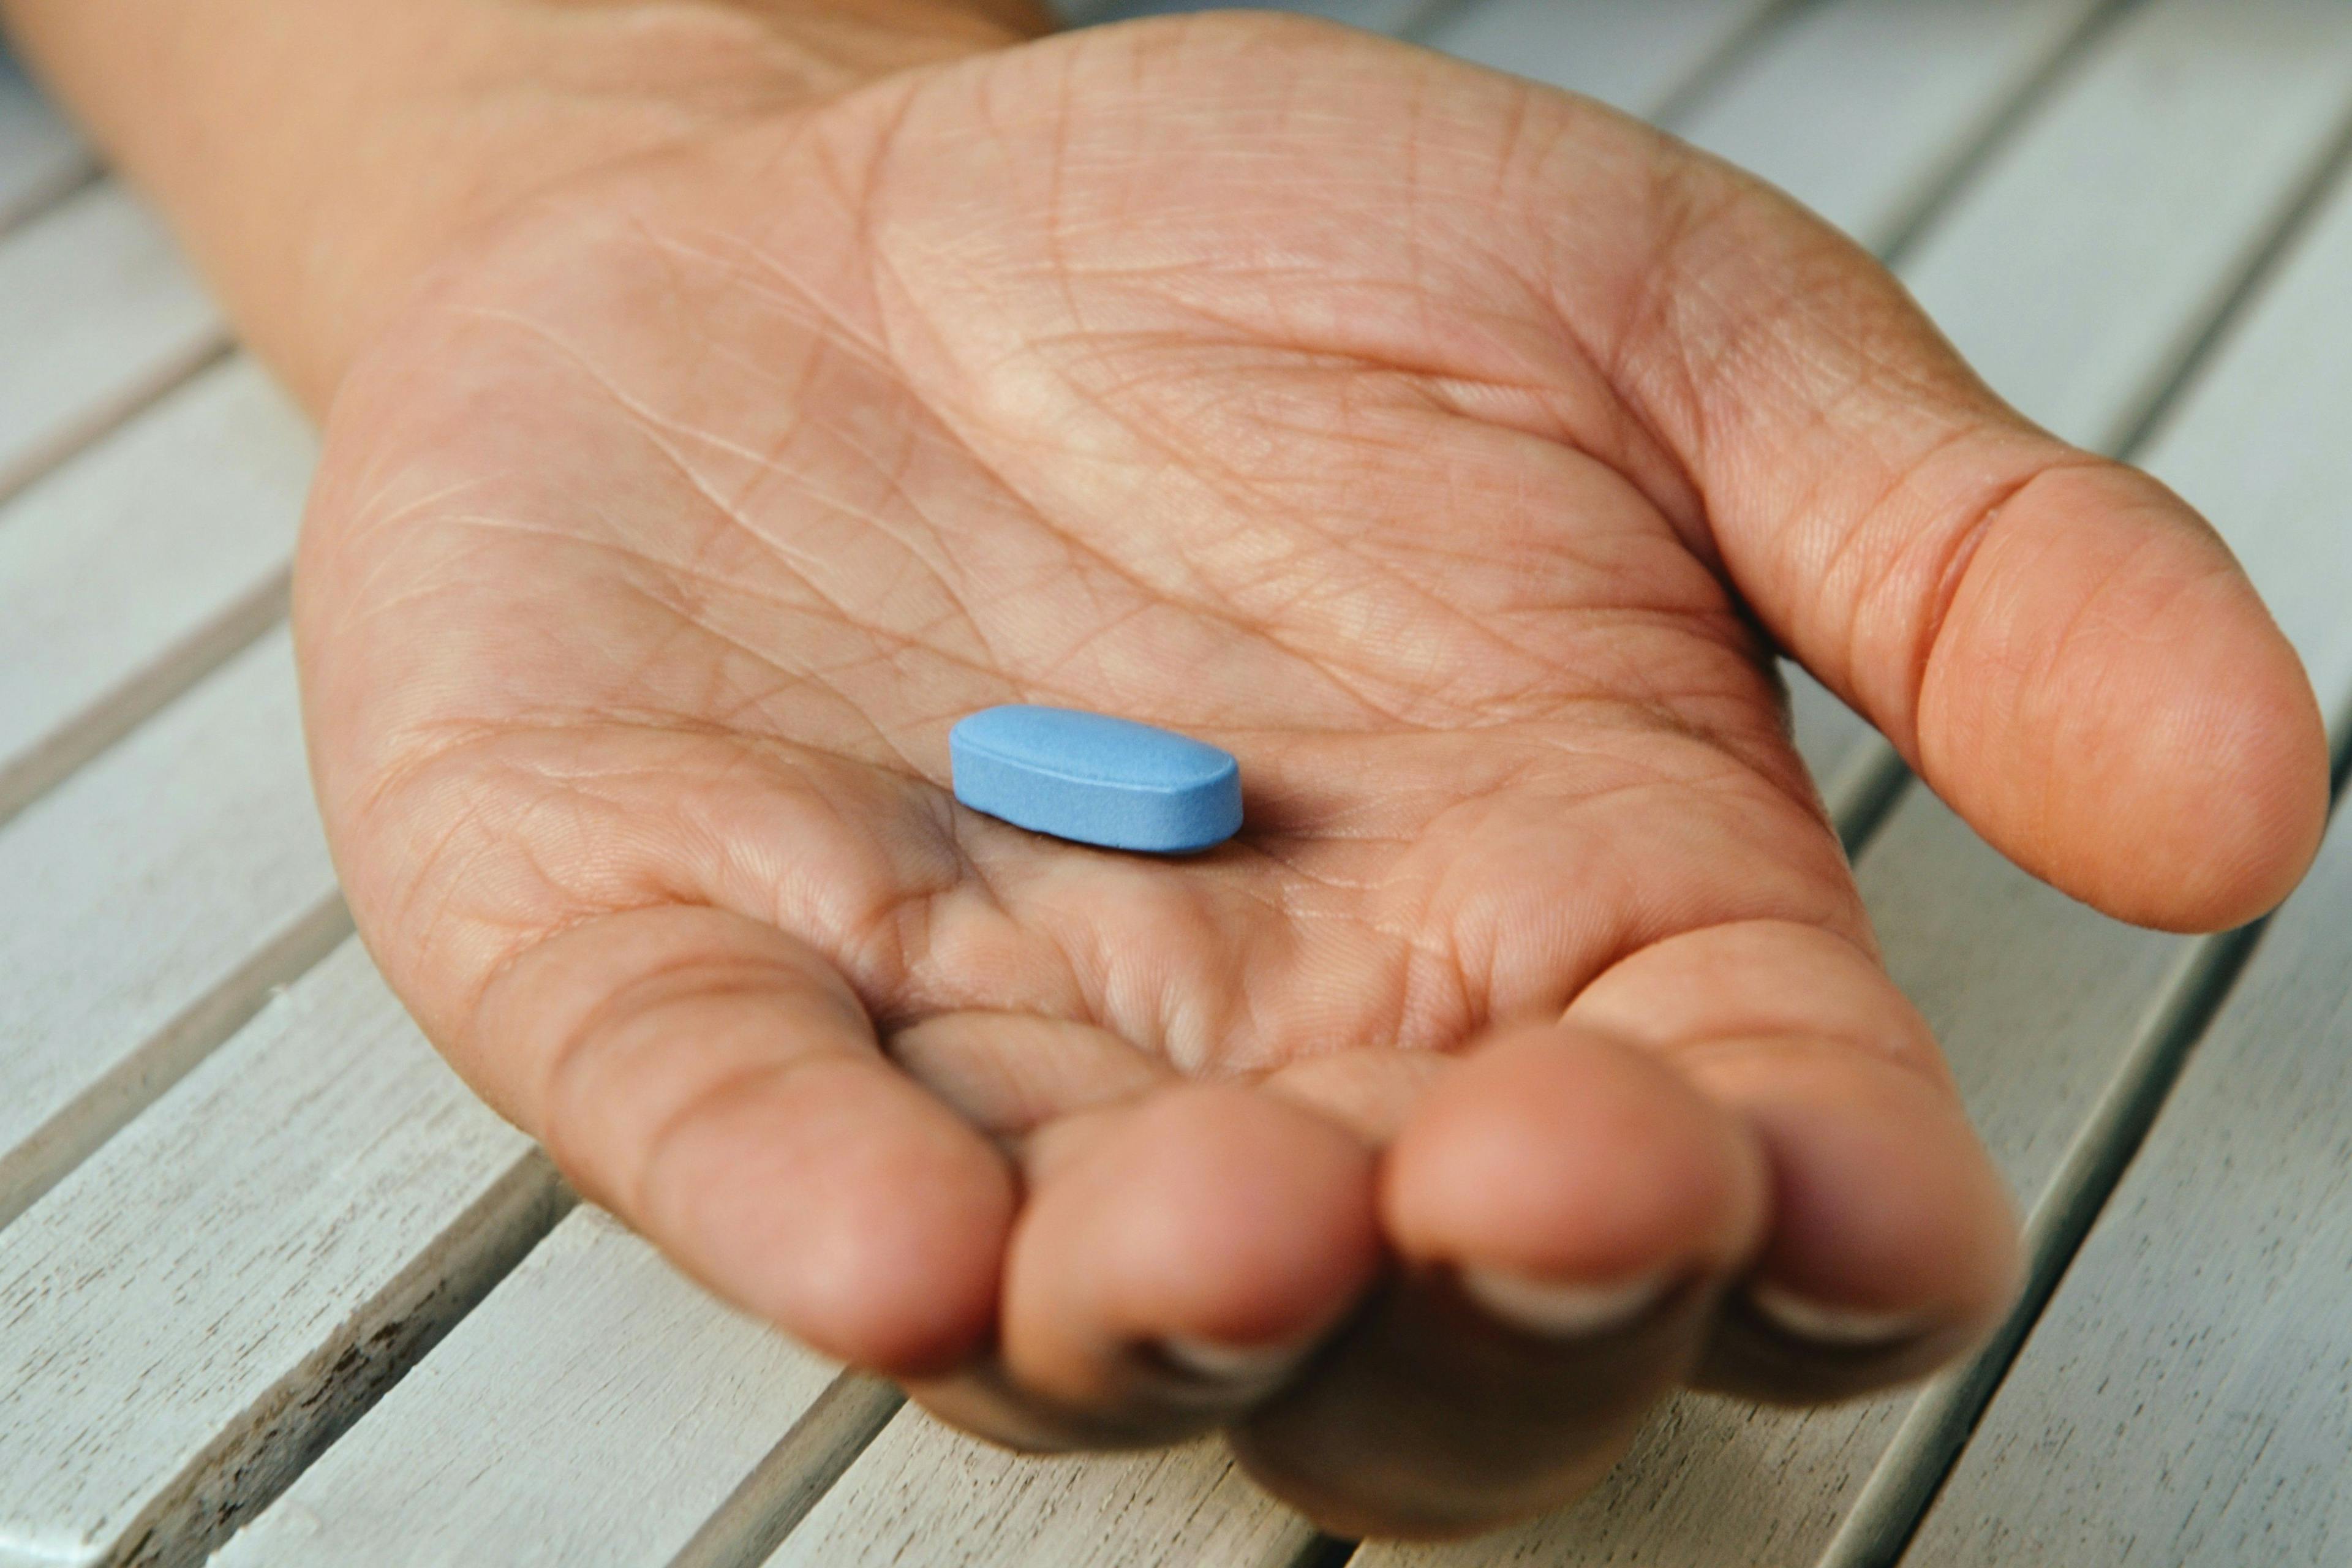 Man holding viagra pill -- Image credit: PaulSat | stock.adobe.com